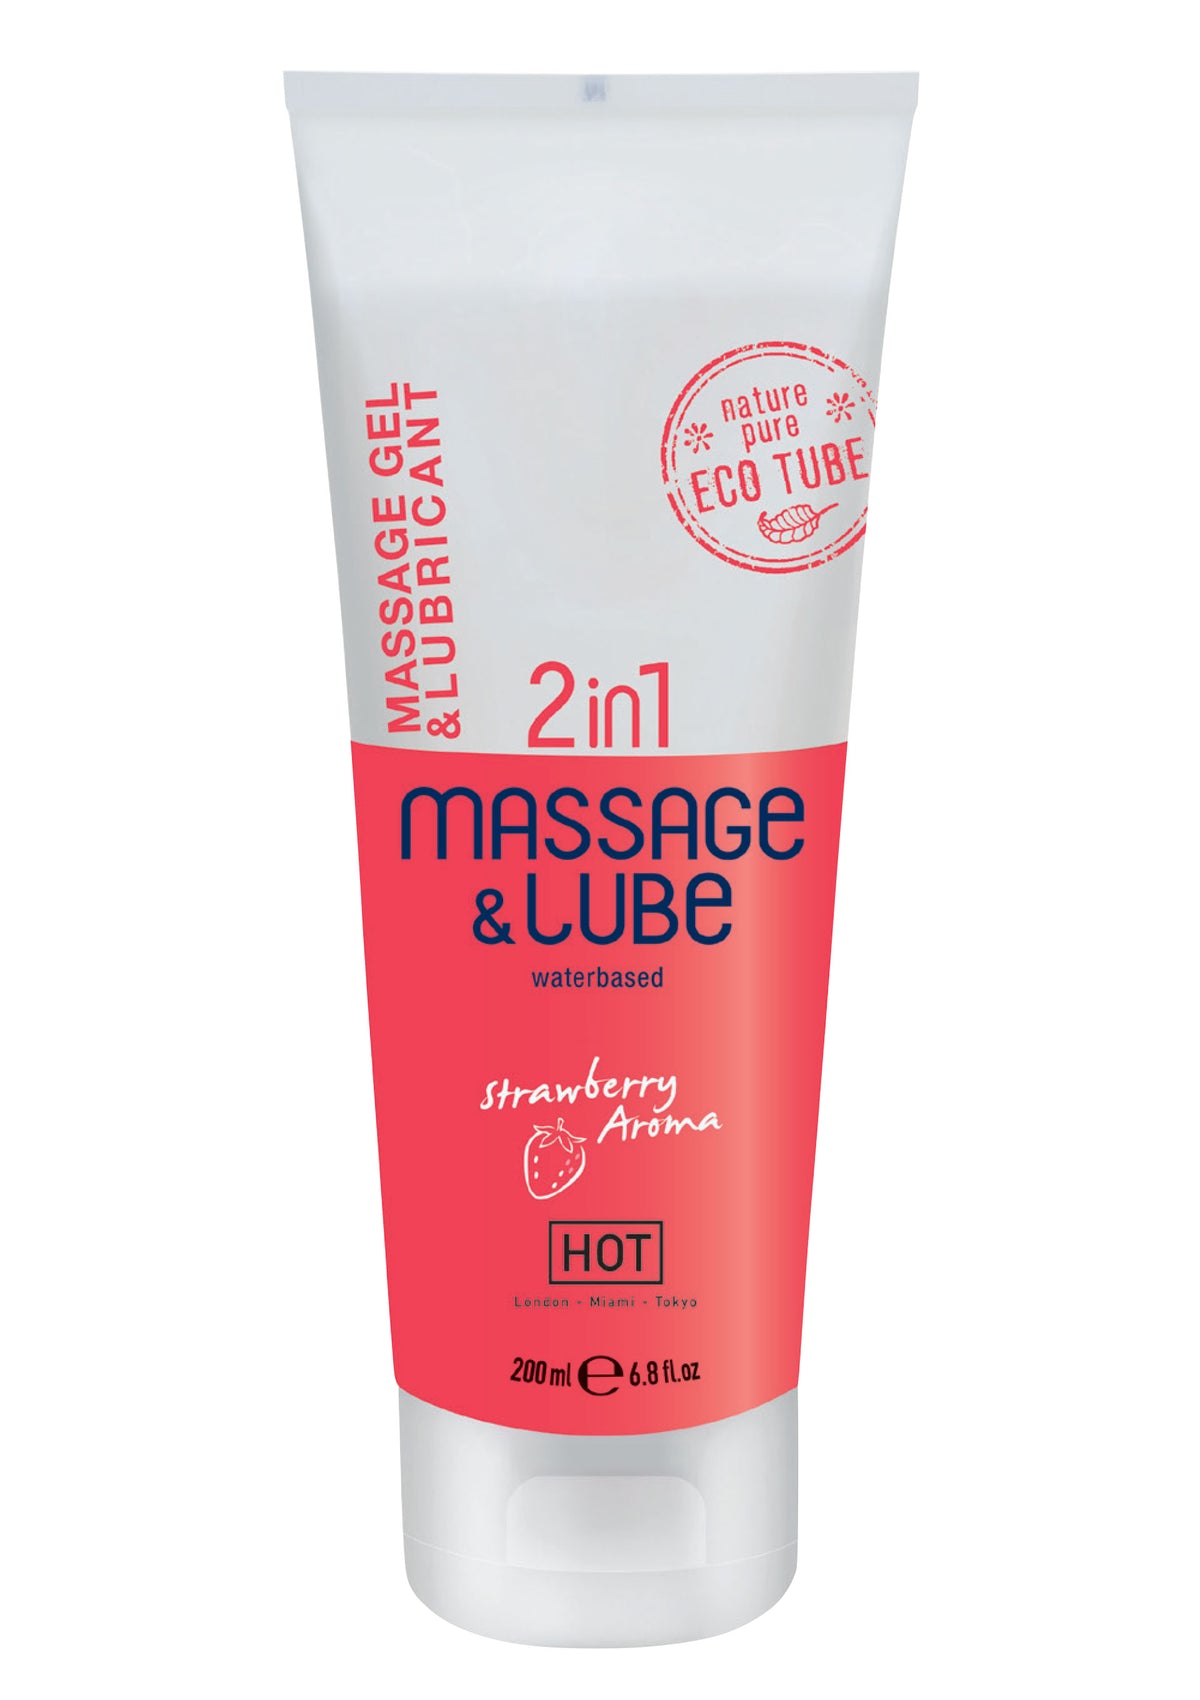 Massage and Glide Gel 2in1-erotic-world-munchen.myshopify.com